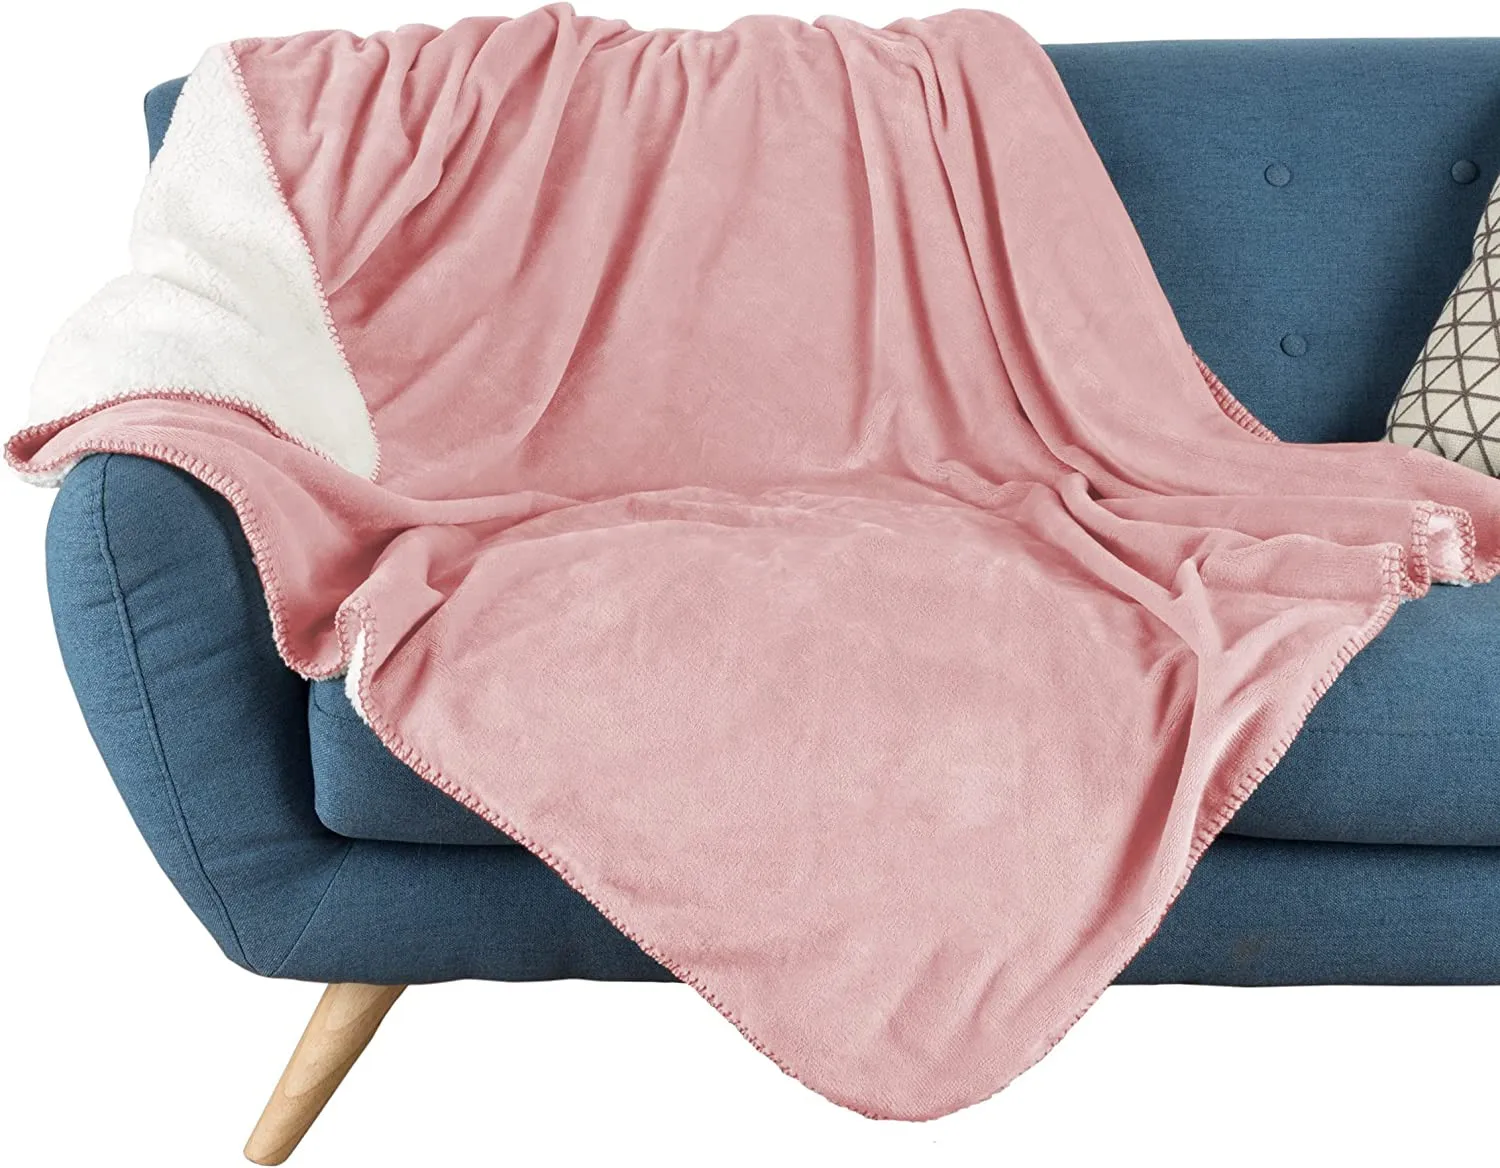 Custom Waterproof Squirt Blanket Sex Fleece Cozy Intimacy Throw Play For Fun Buy Waterproof